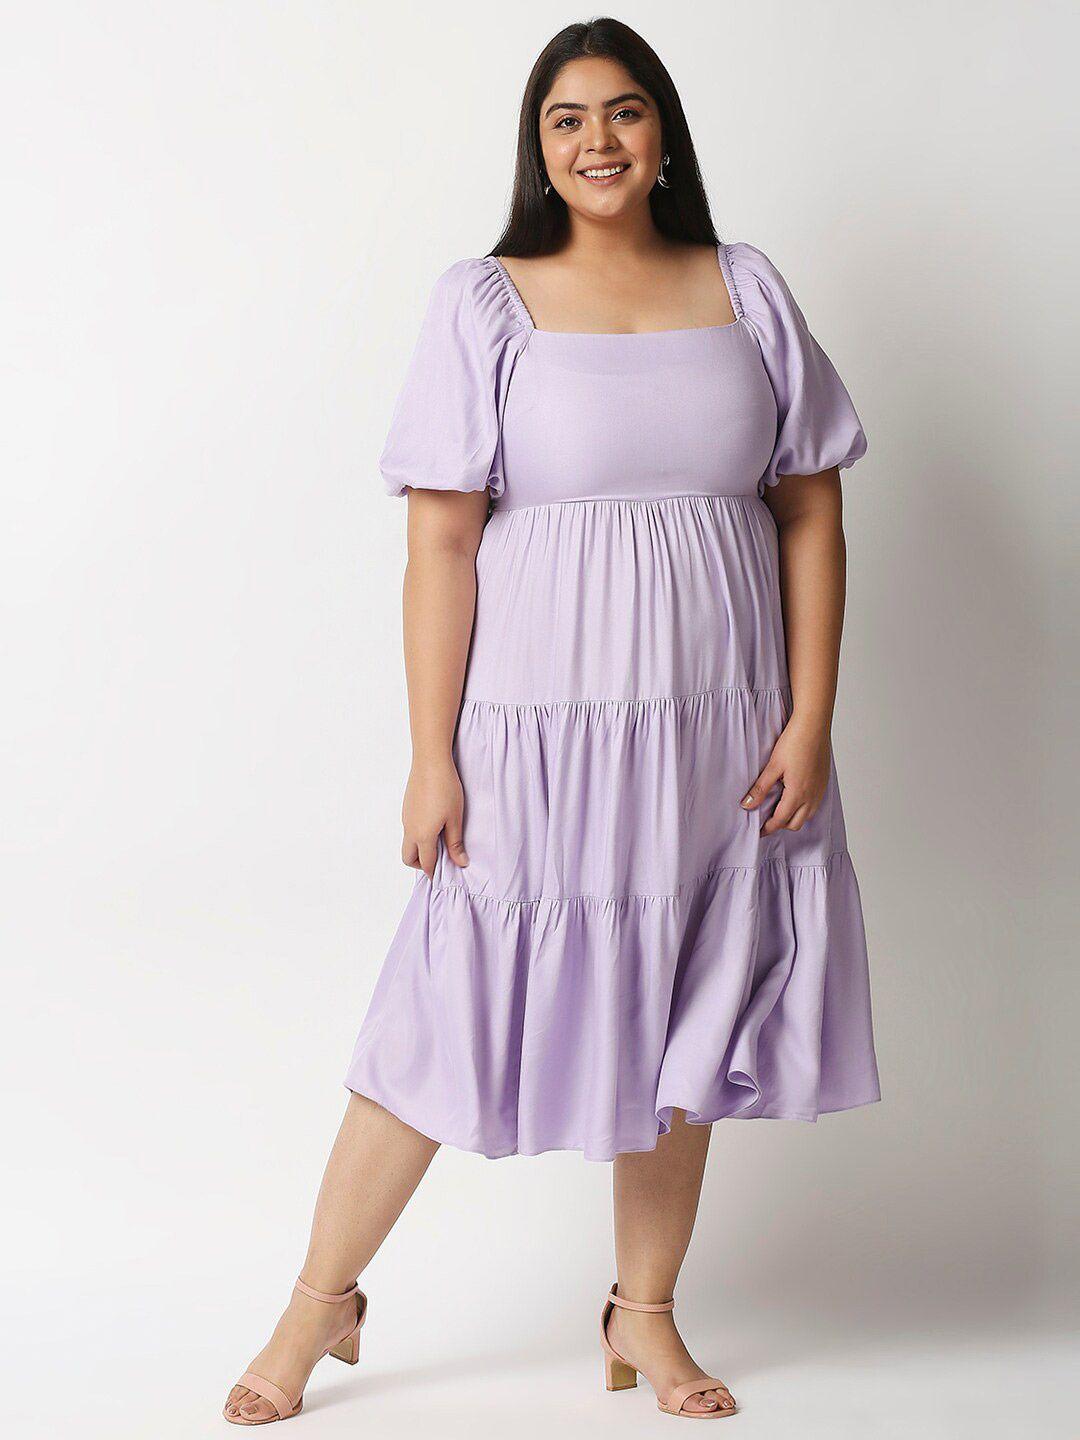 20dresses purple layered empire midi dress